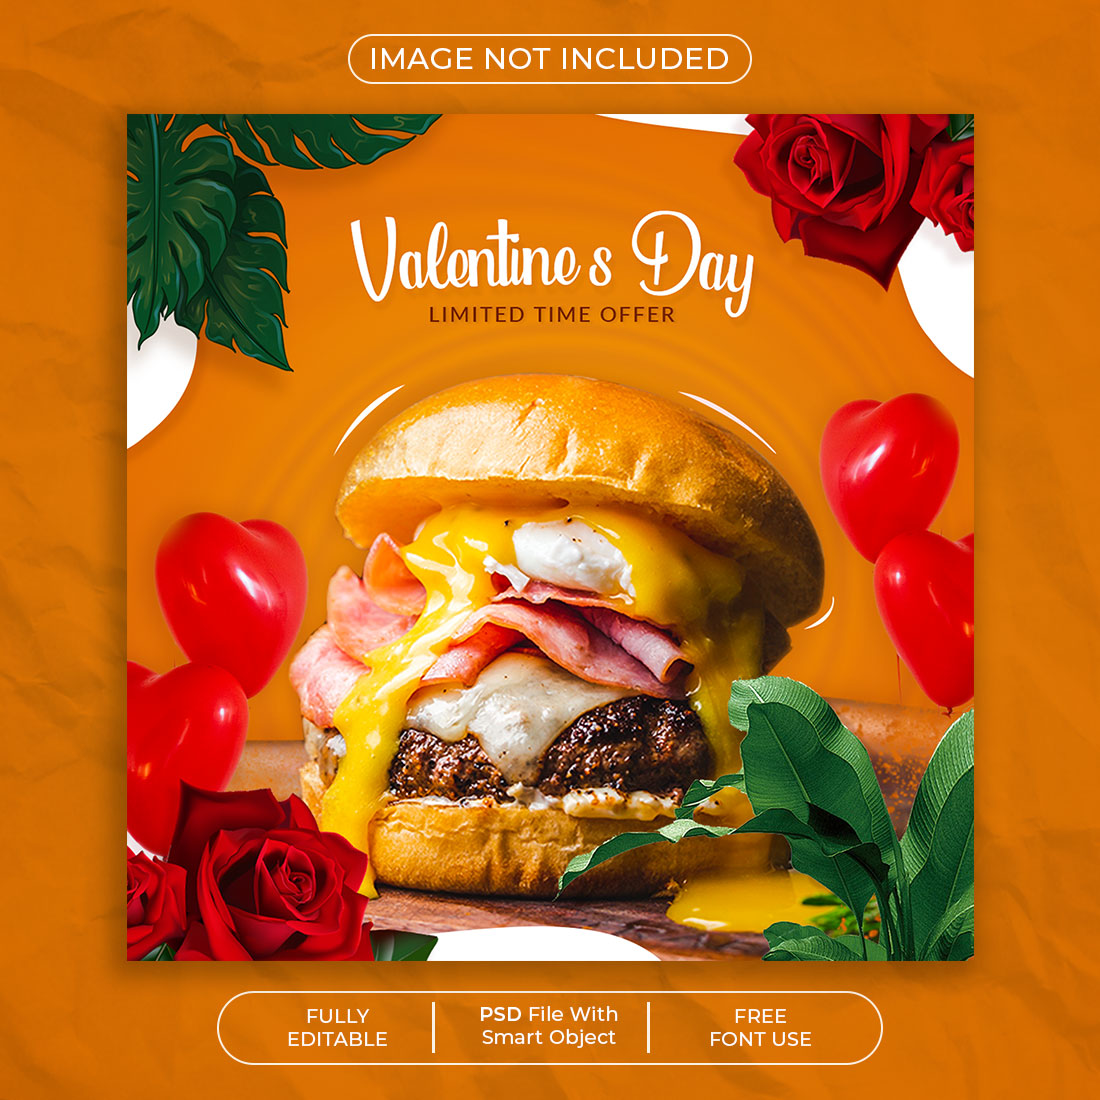 Romantic Valentine Day Dinner Menu Social Media Post Template cover image.